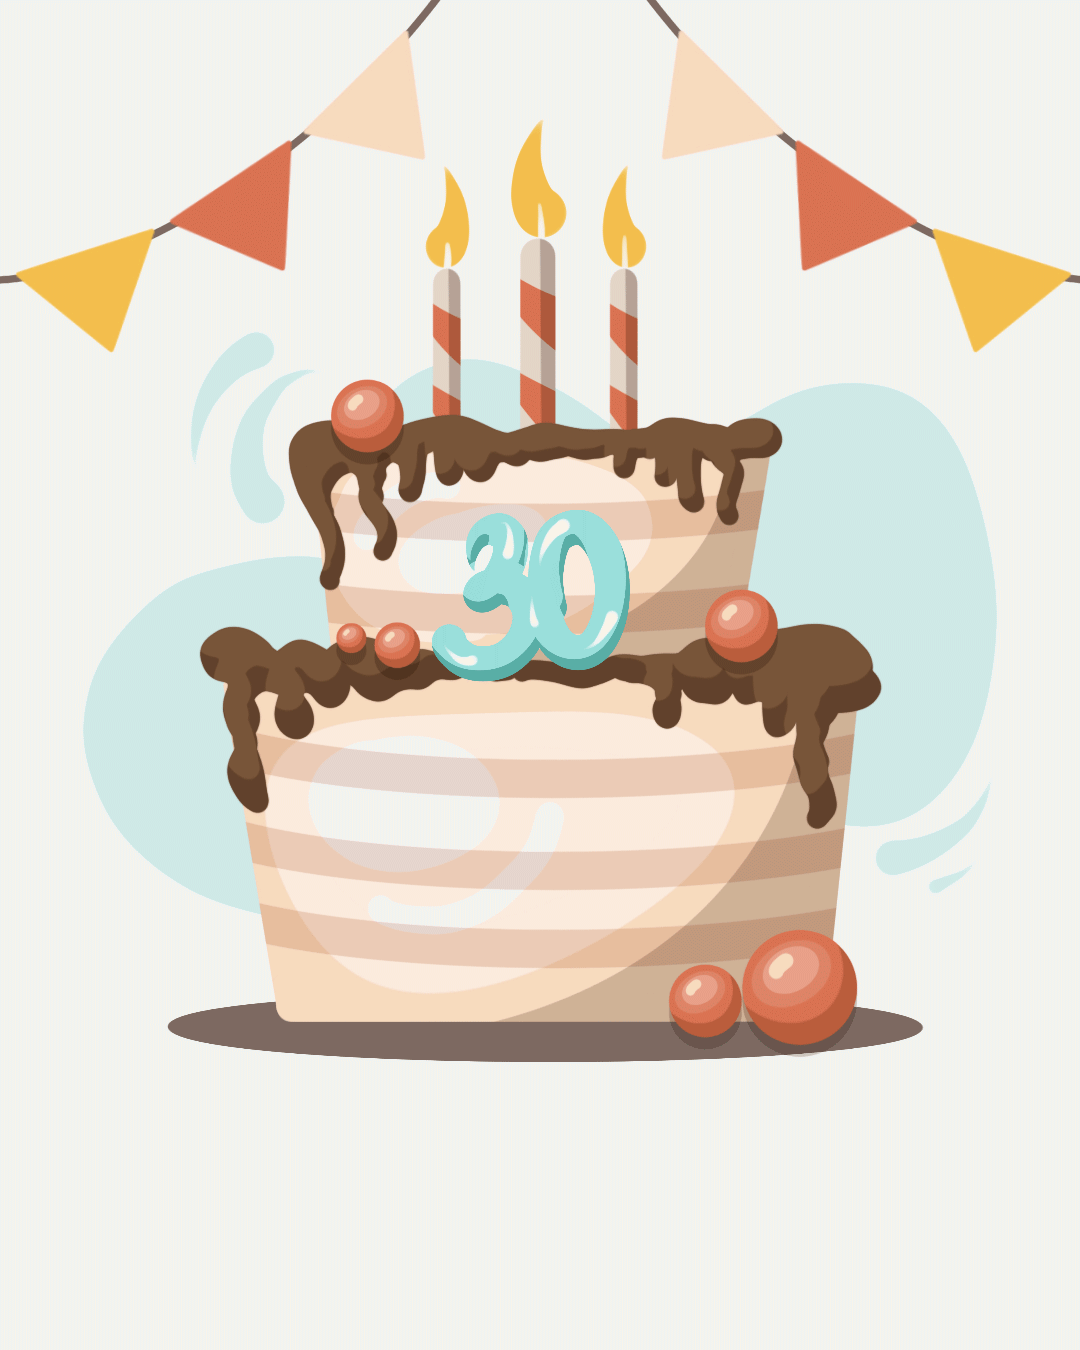 Happy 30th Birthday with Cake - birthdayyou.com